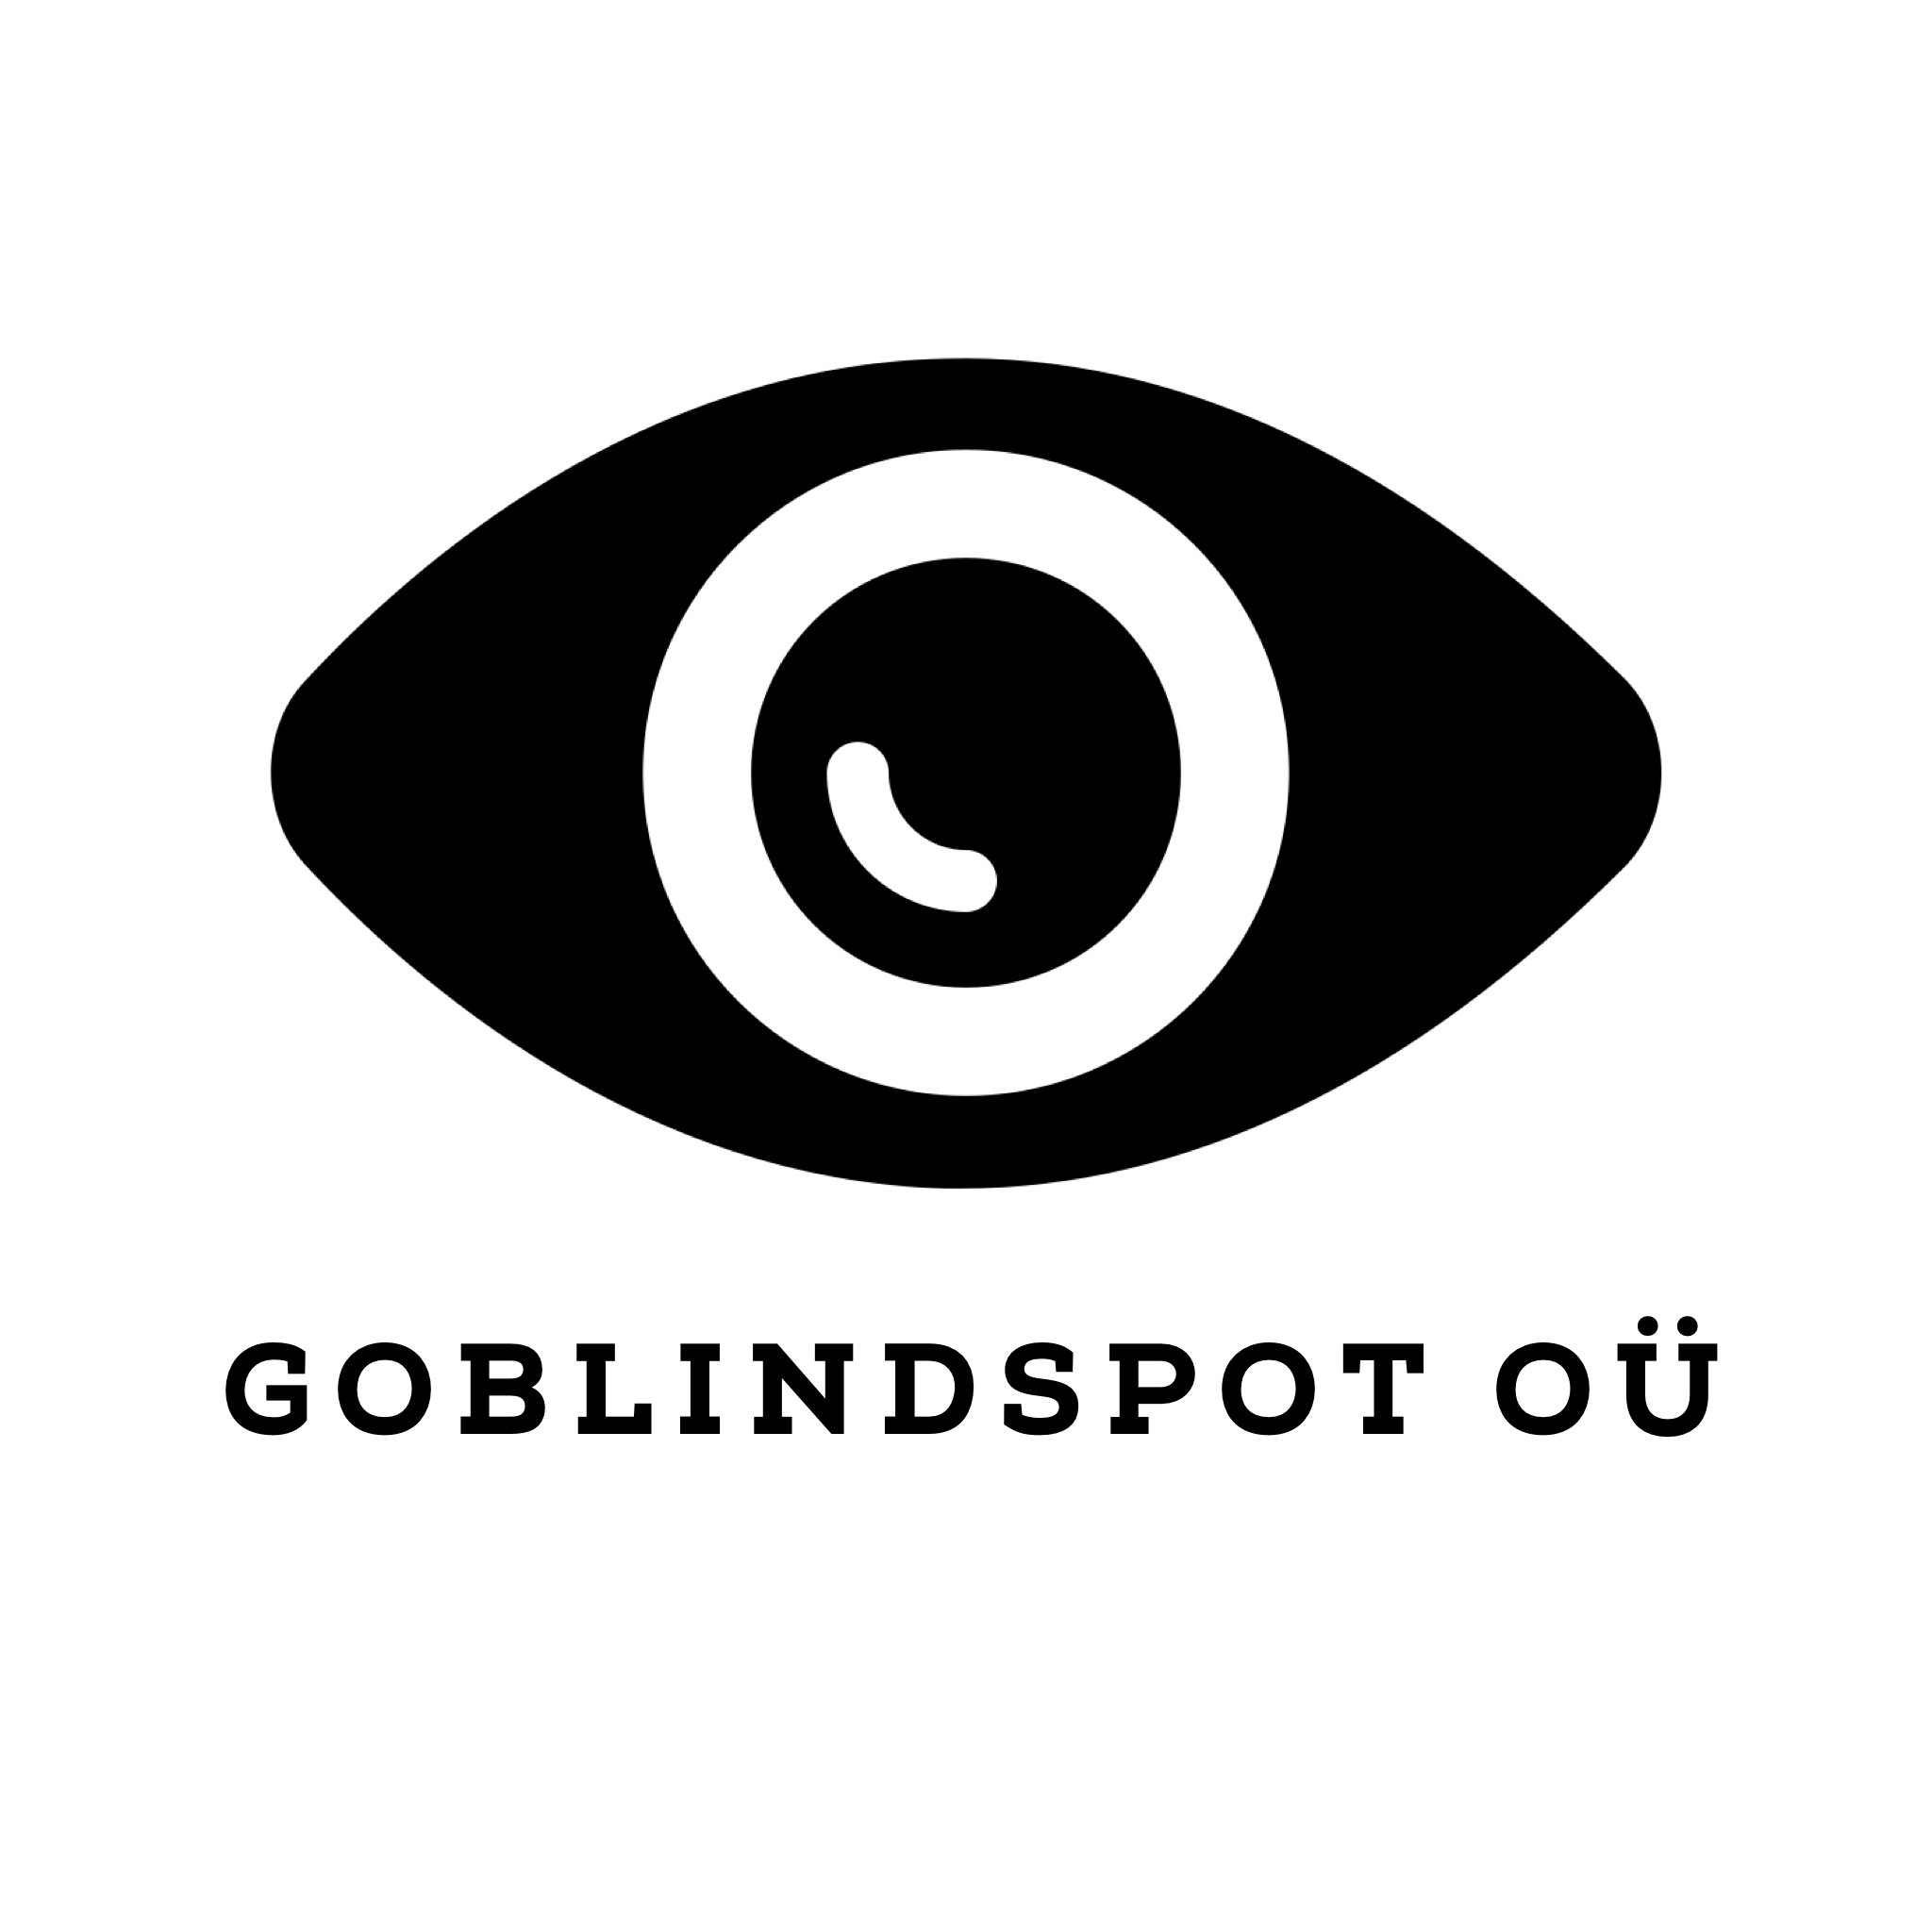 GoblindSpot OU logo, black and white eye